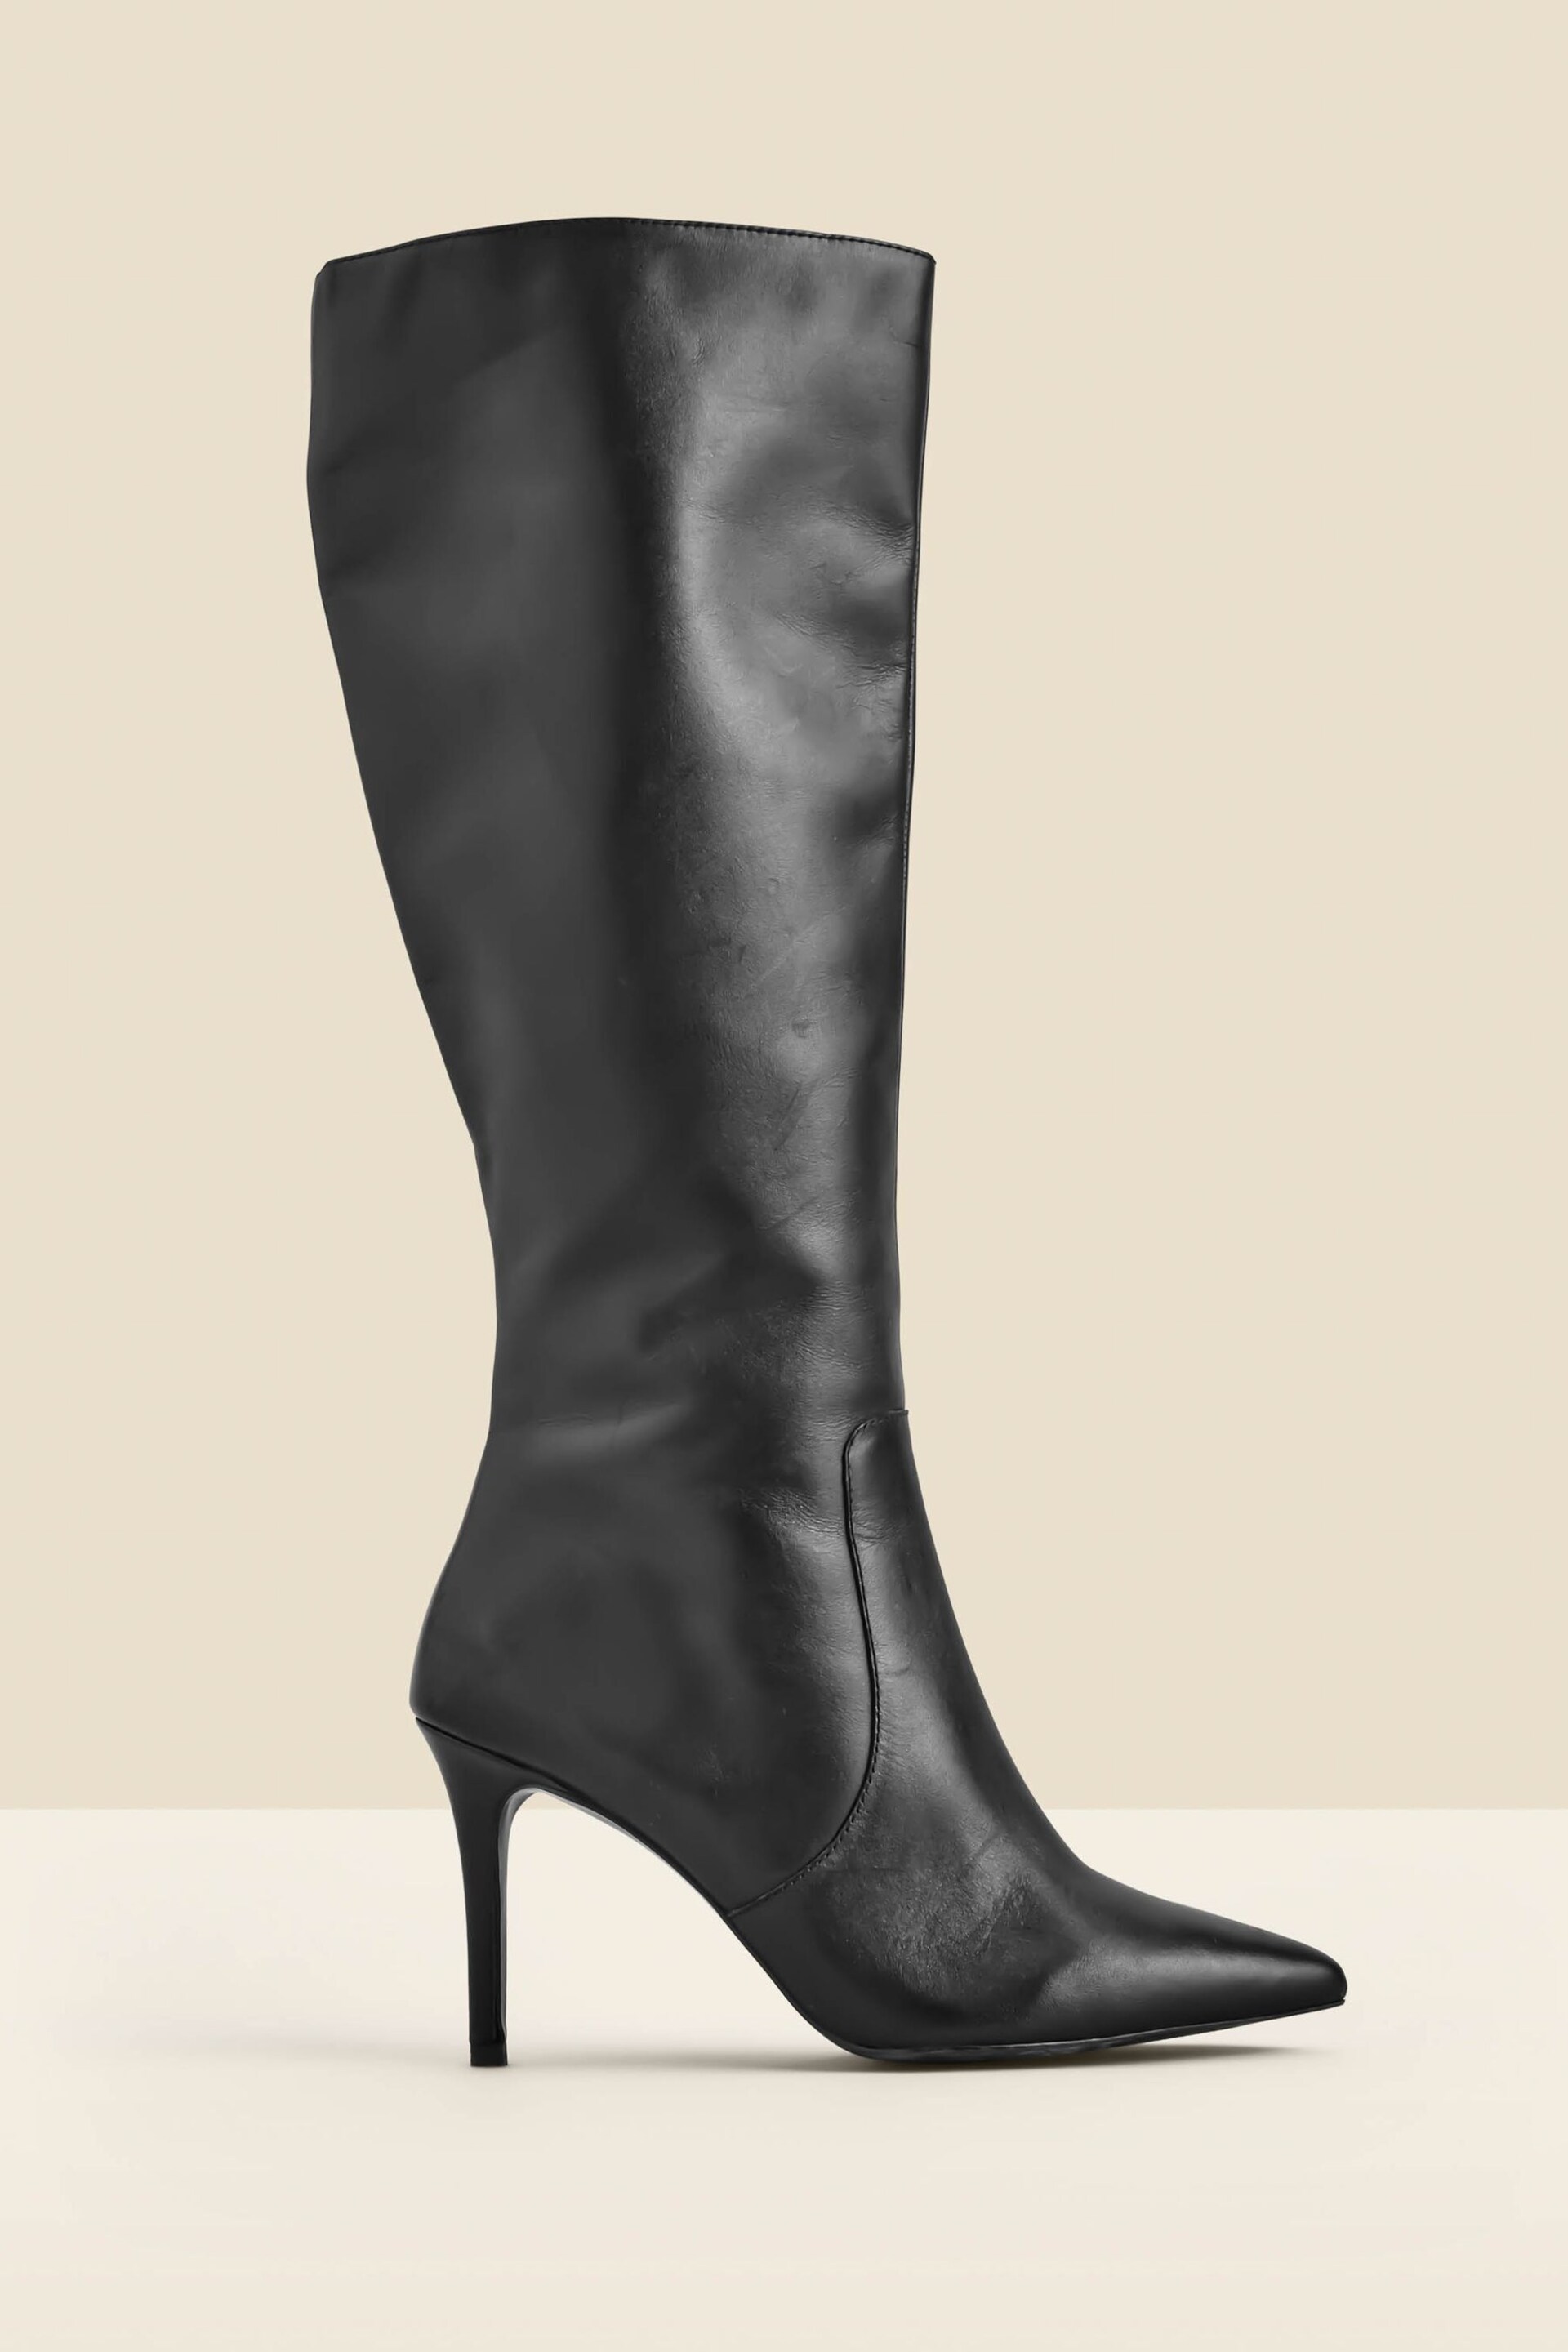 Sosandar Black Leather Stiletto Heel Knee High Boots - Image 2 of 5